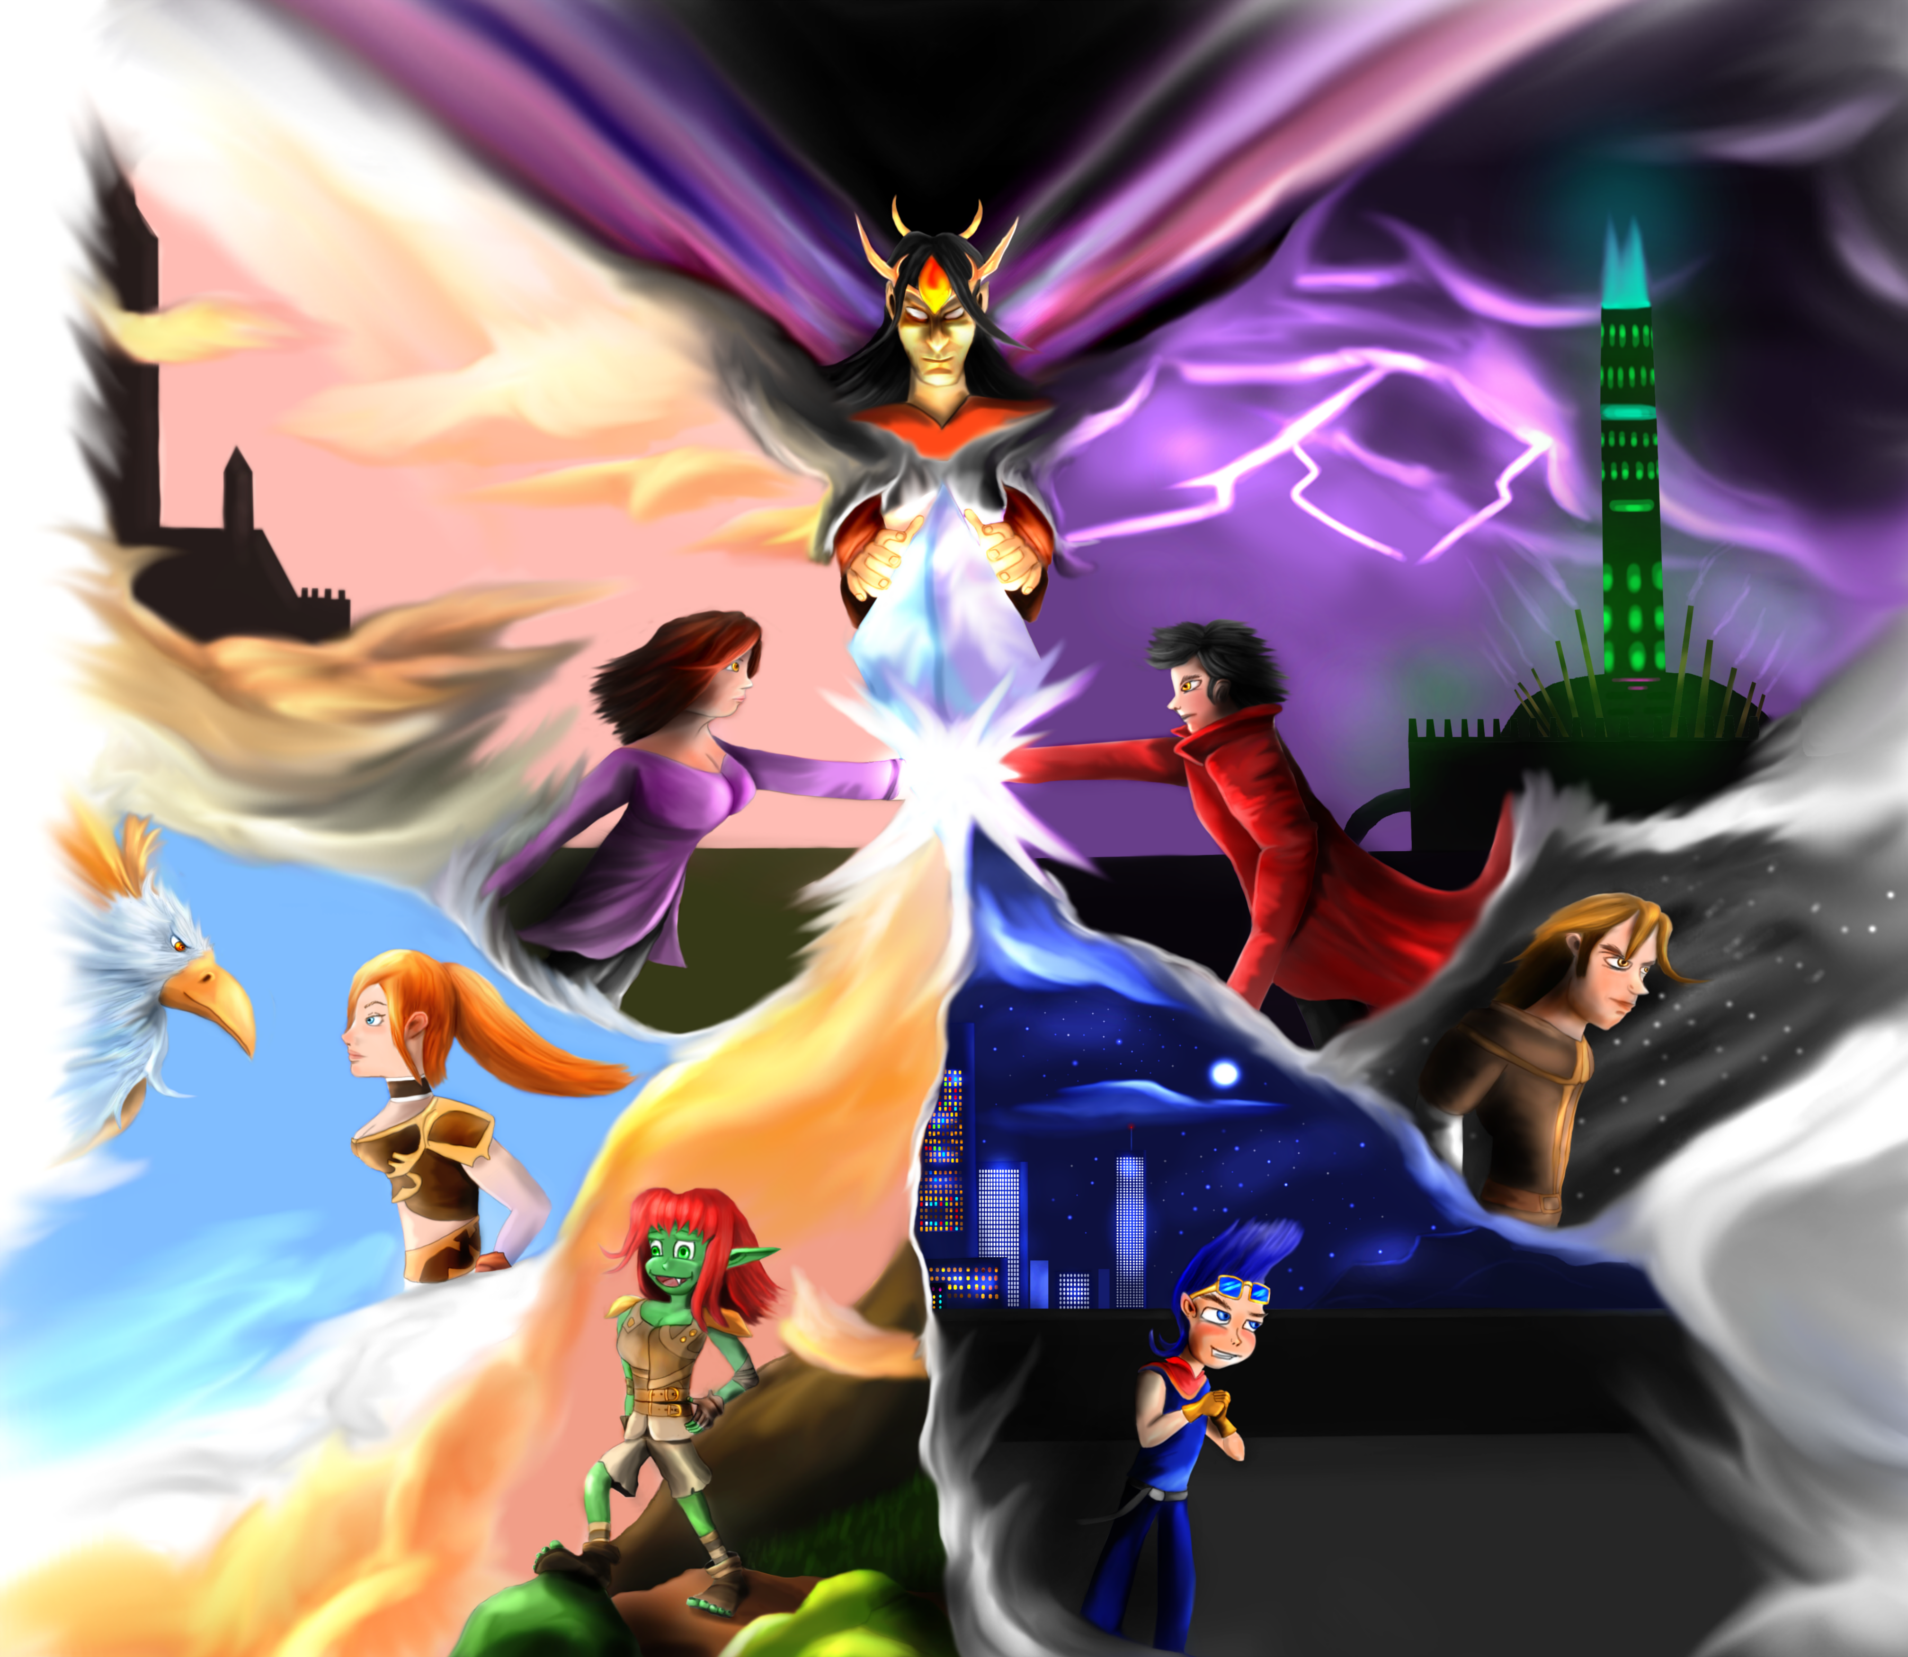 Legendary Heroes, #1 Gameplay PT-BR (O INÍCIO & ANÁLISE) + Playthrough  100%